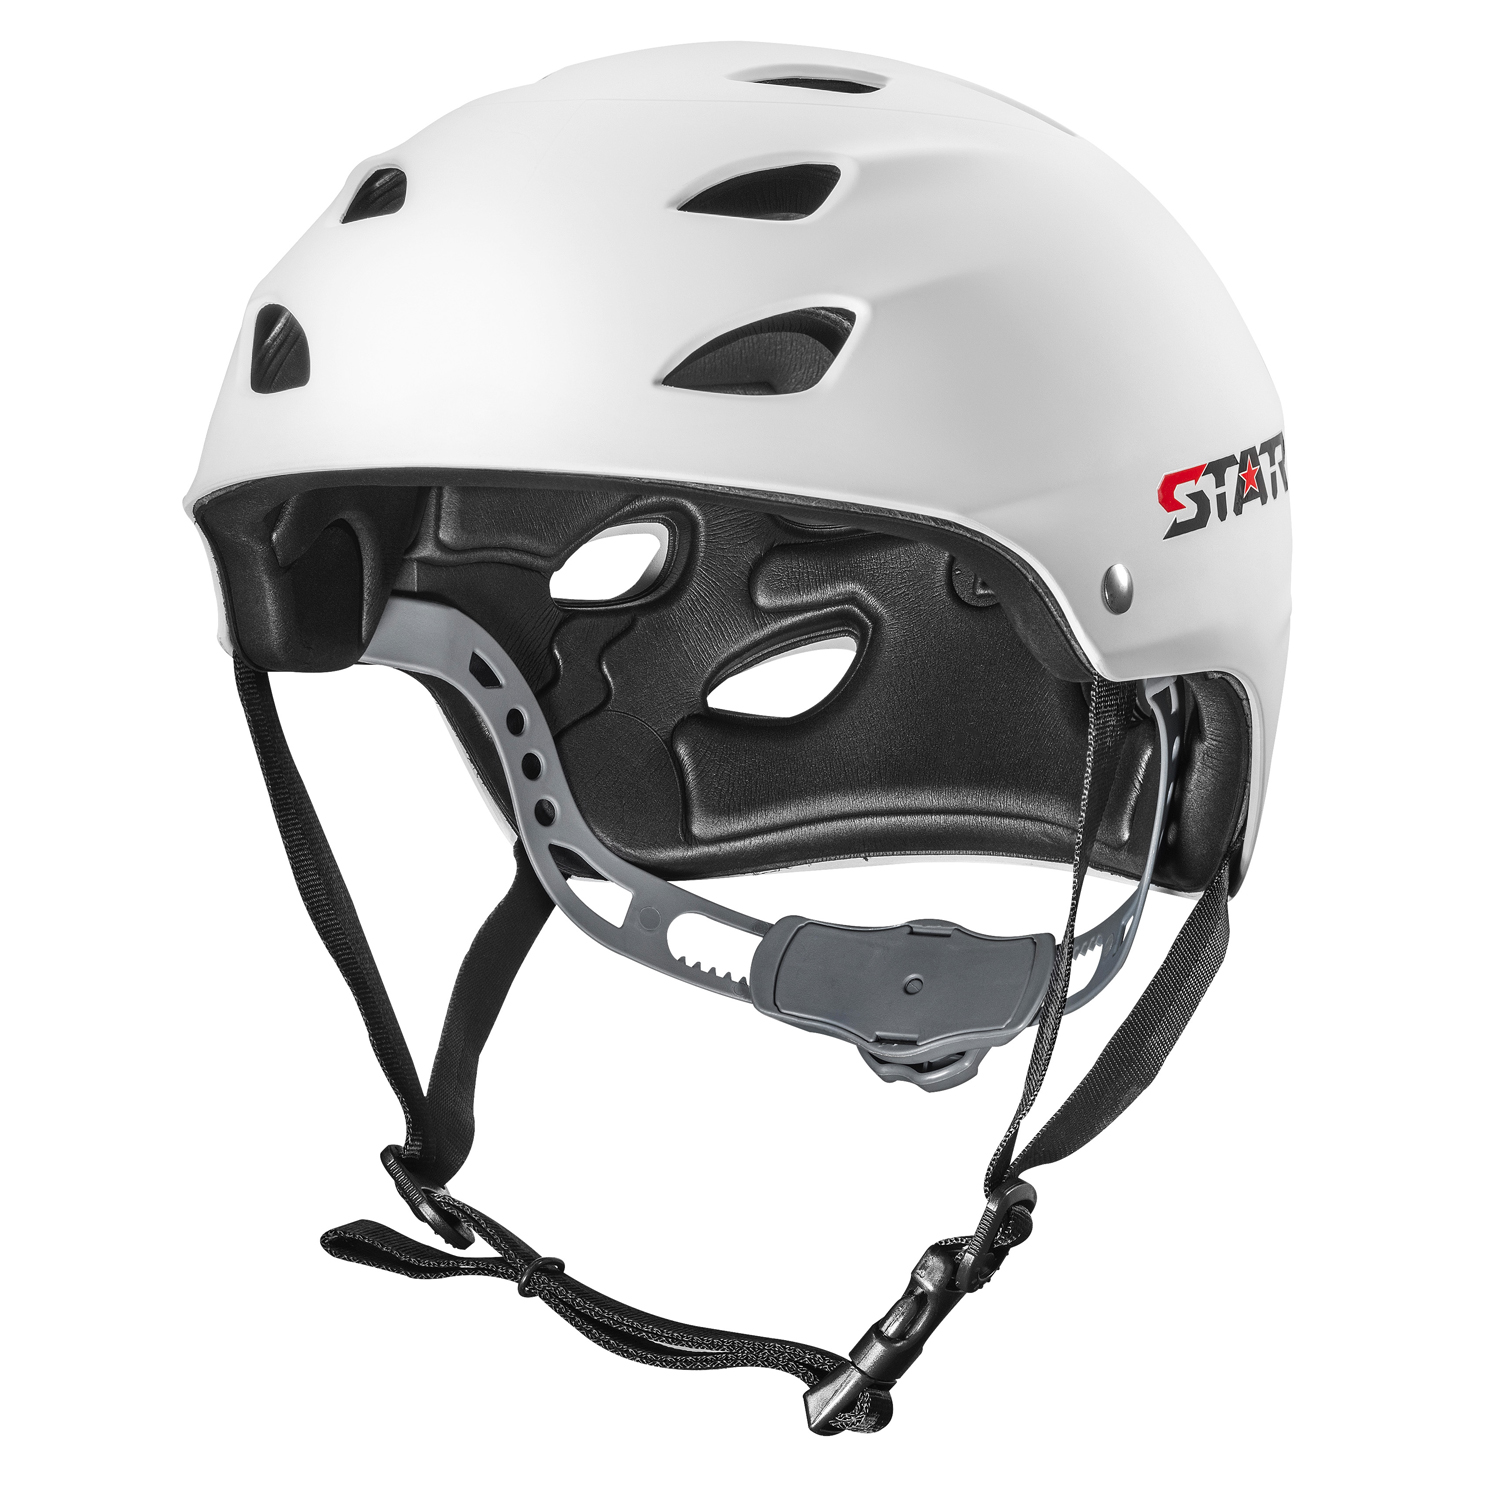 WH-17 Water Sport Helmet with earpad